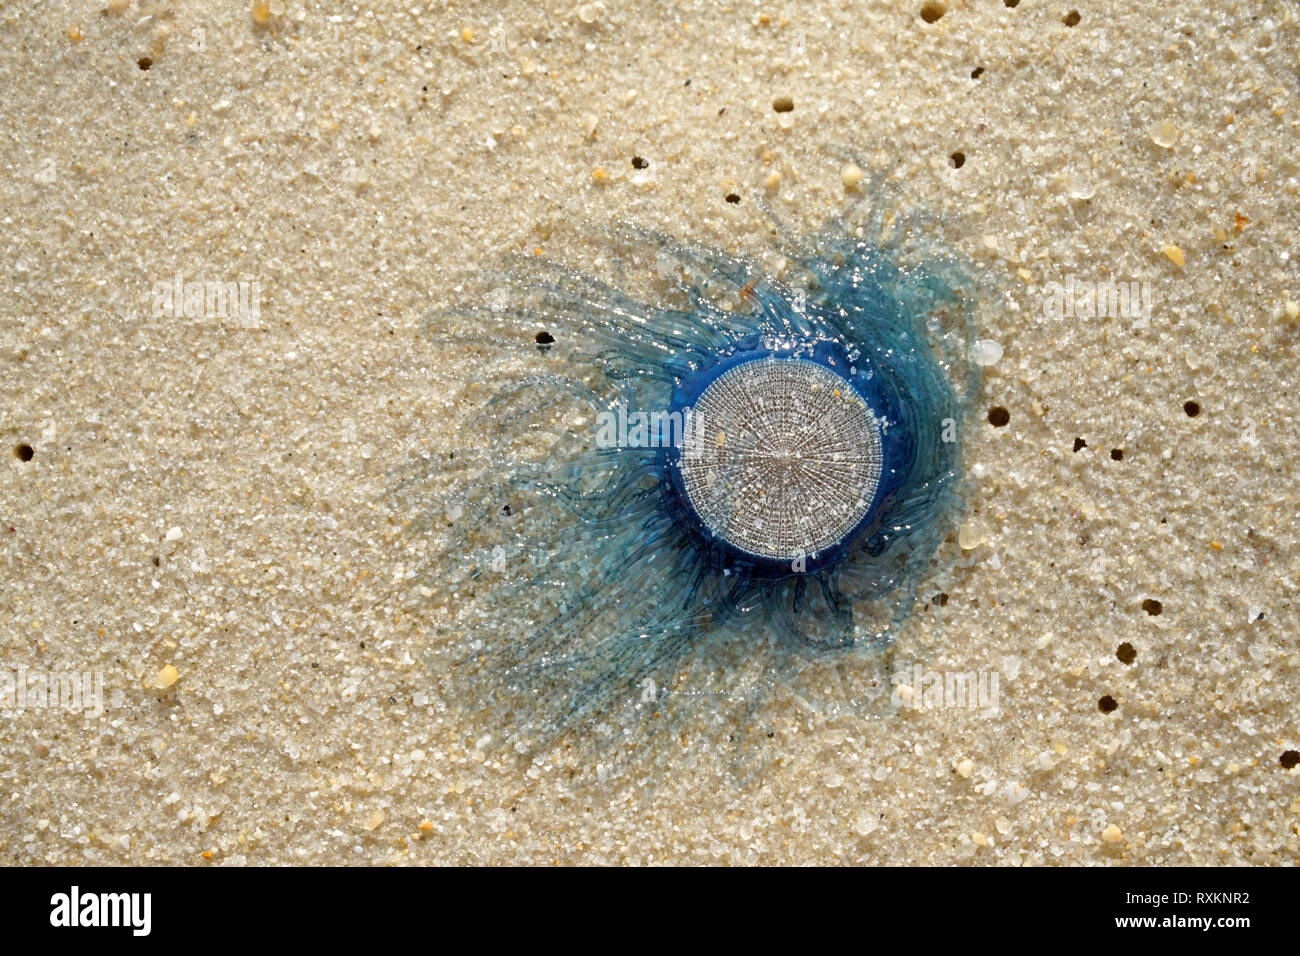 Blue button jellyfish (Porpita porpita) washed up on shore, Koh Samui, Thailand Stock Photo